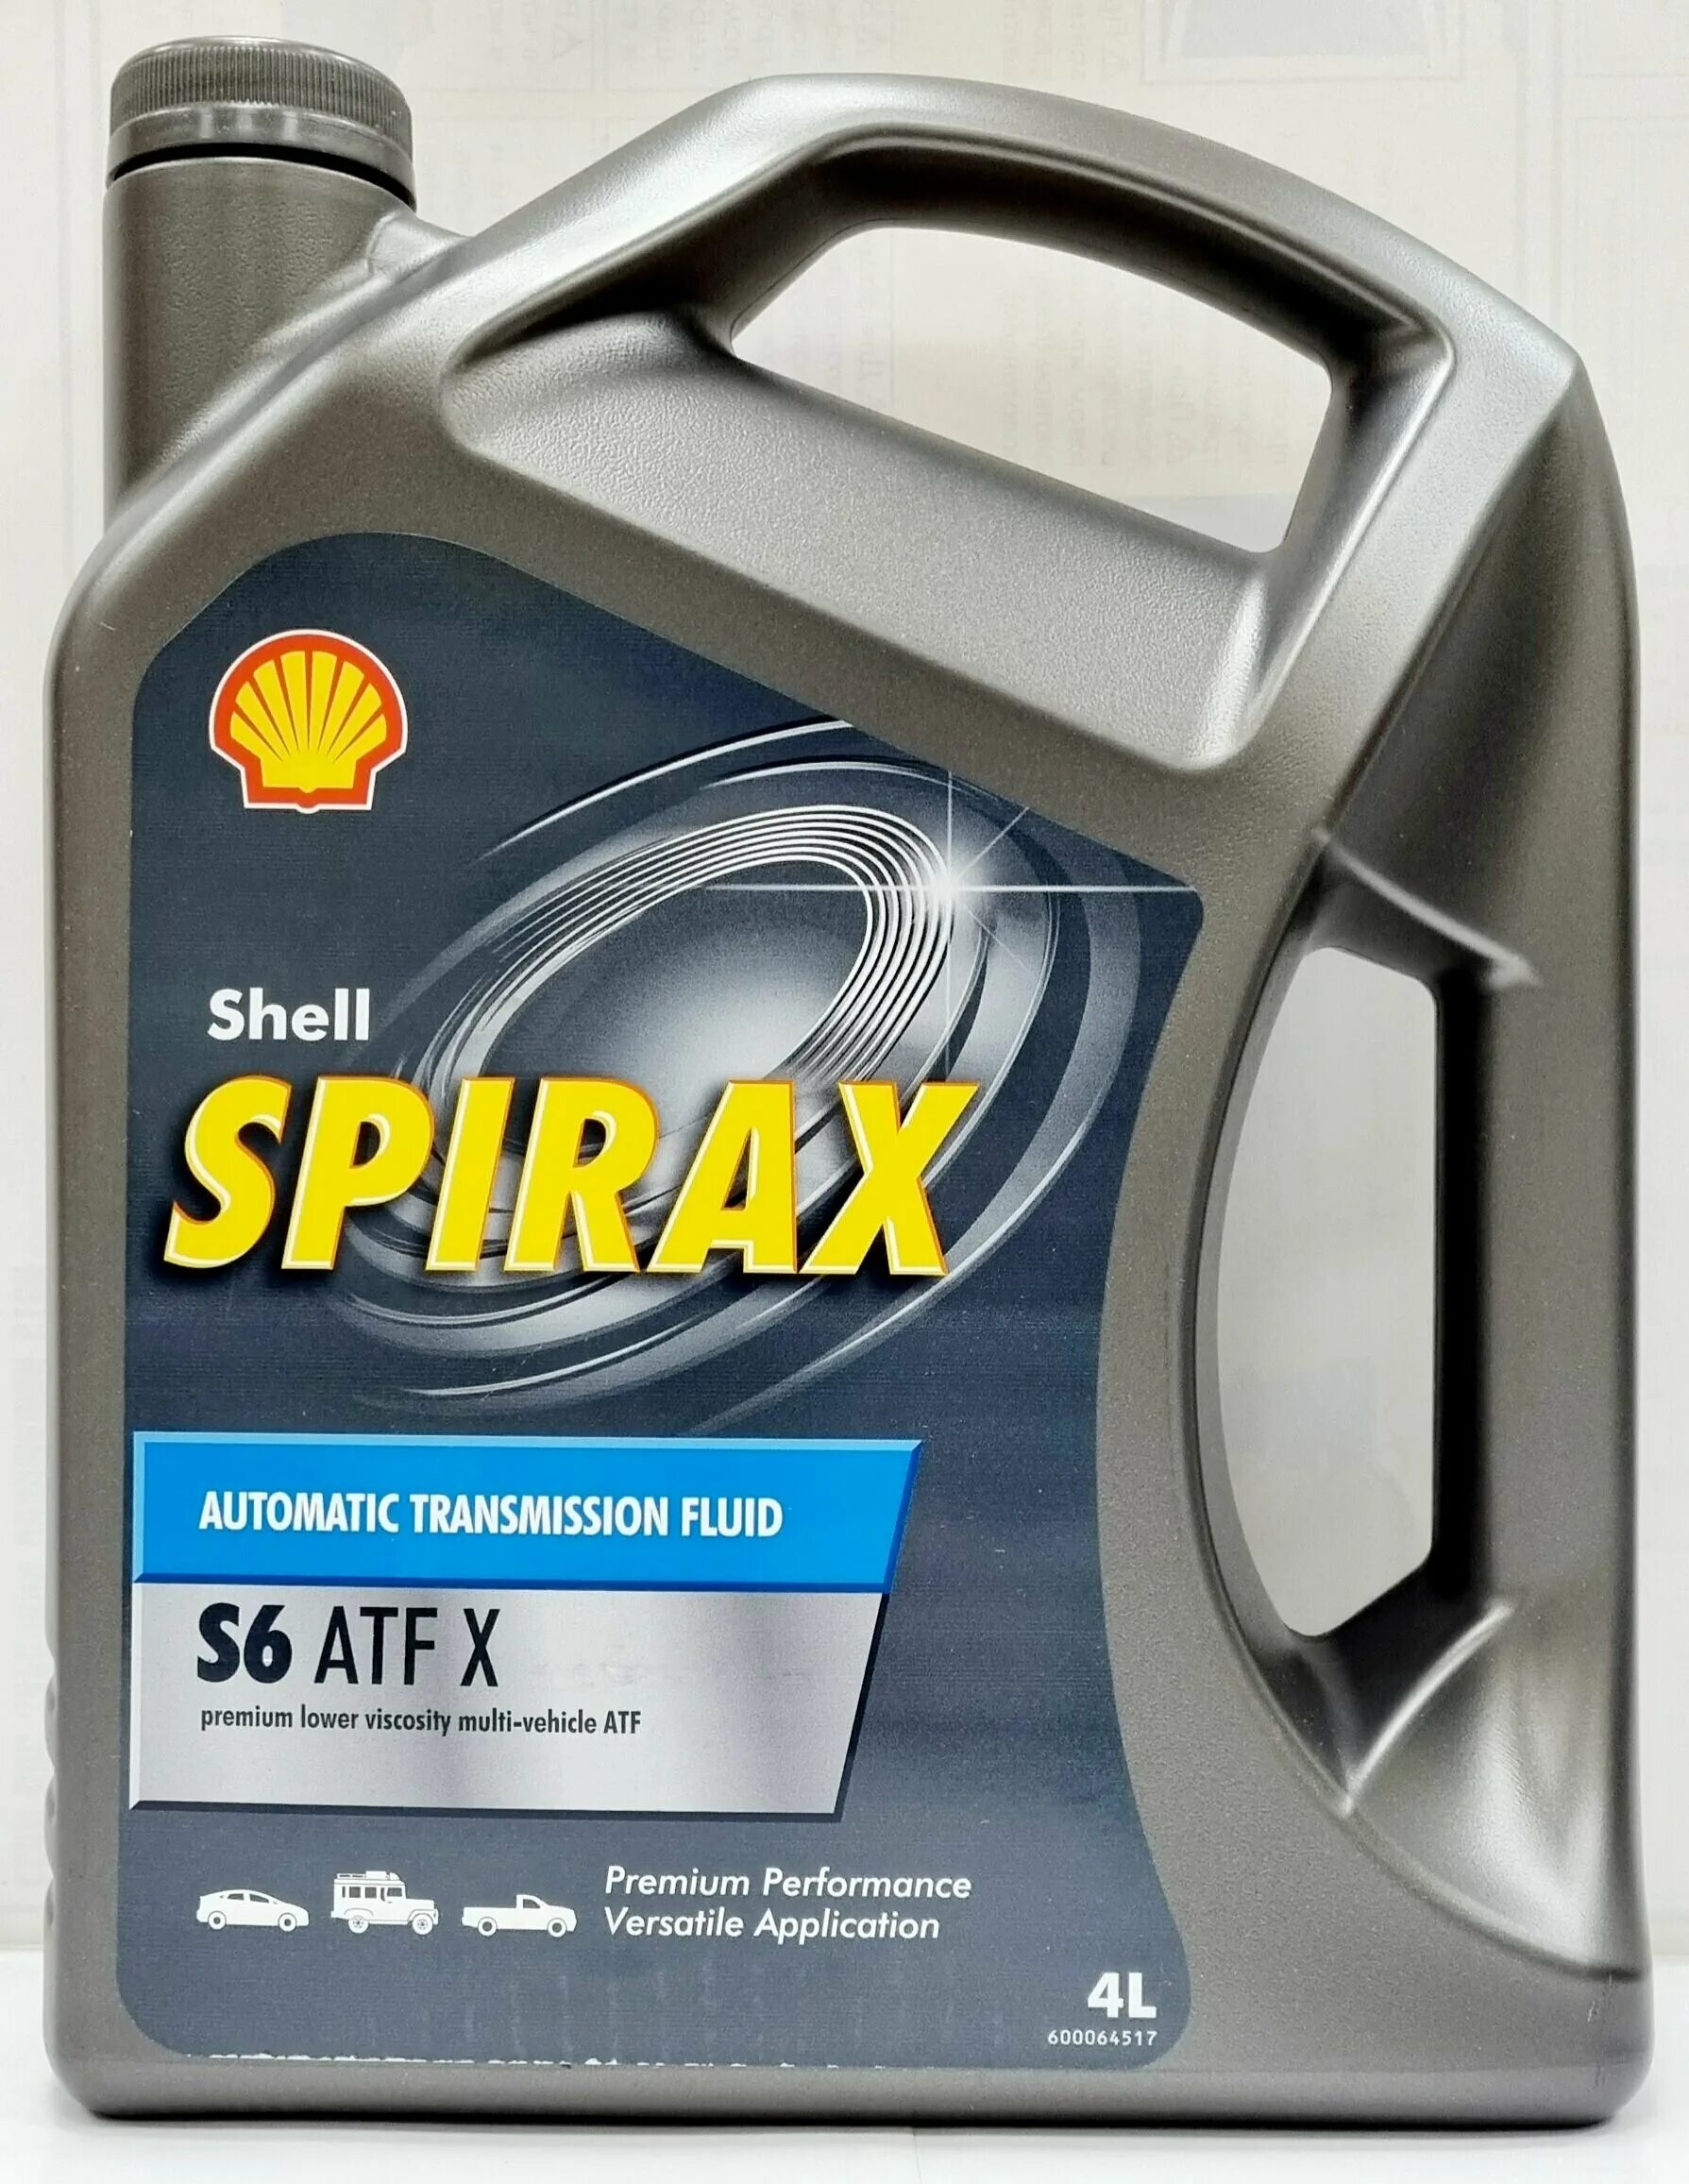 Shell atf x. Shell Spirax s6 ATF. Shell Spirax s6 ATF X 4л. S6 ATF X Shell. Масло трансмиссионное Shell Spirax s6 ATF X артикул.